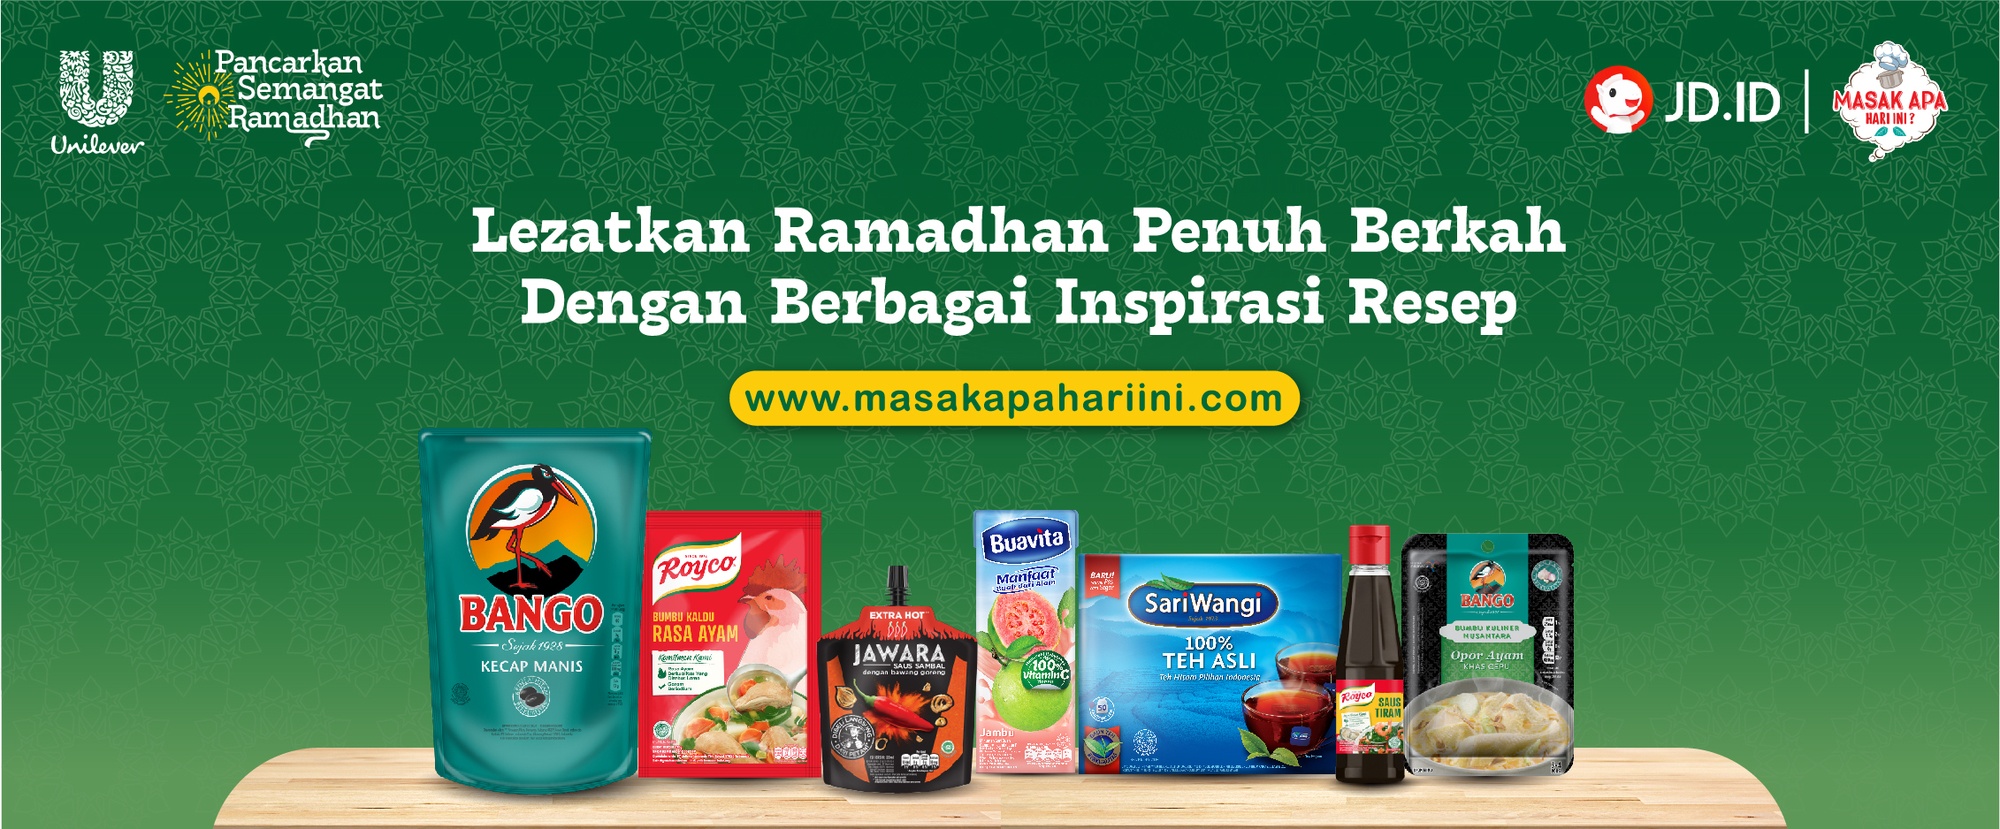 banner ramadan bersama unilever